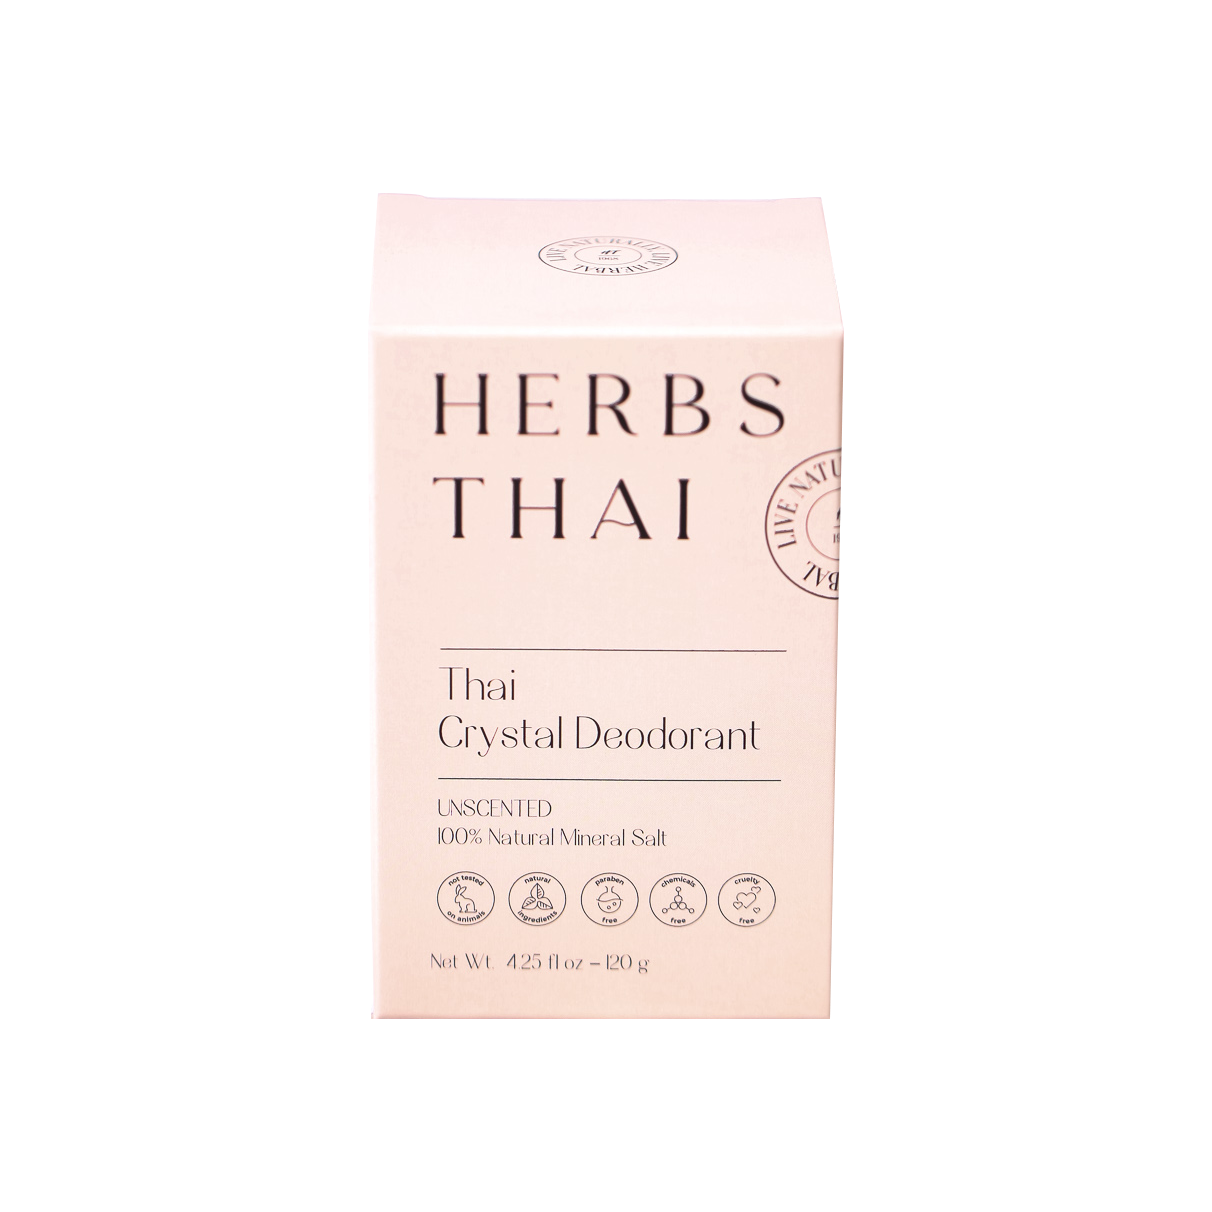 Herbs Thai Crystal Deodorant